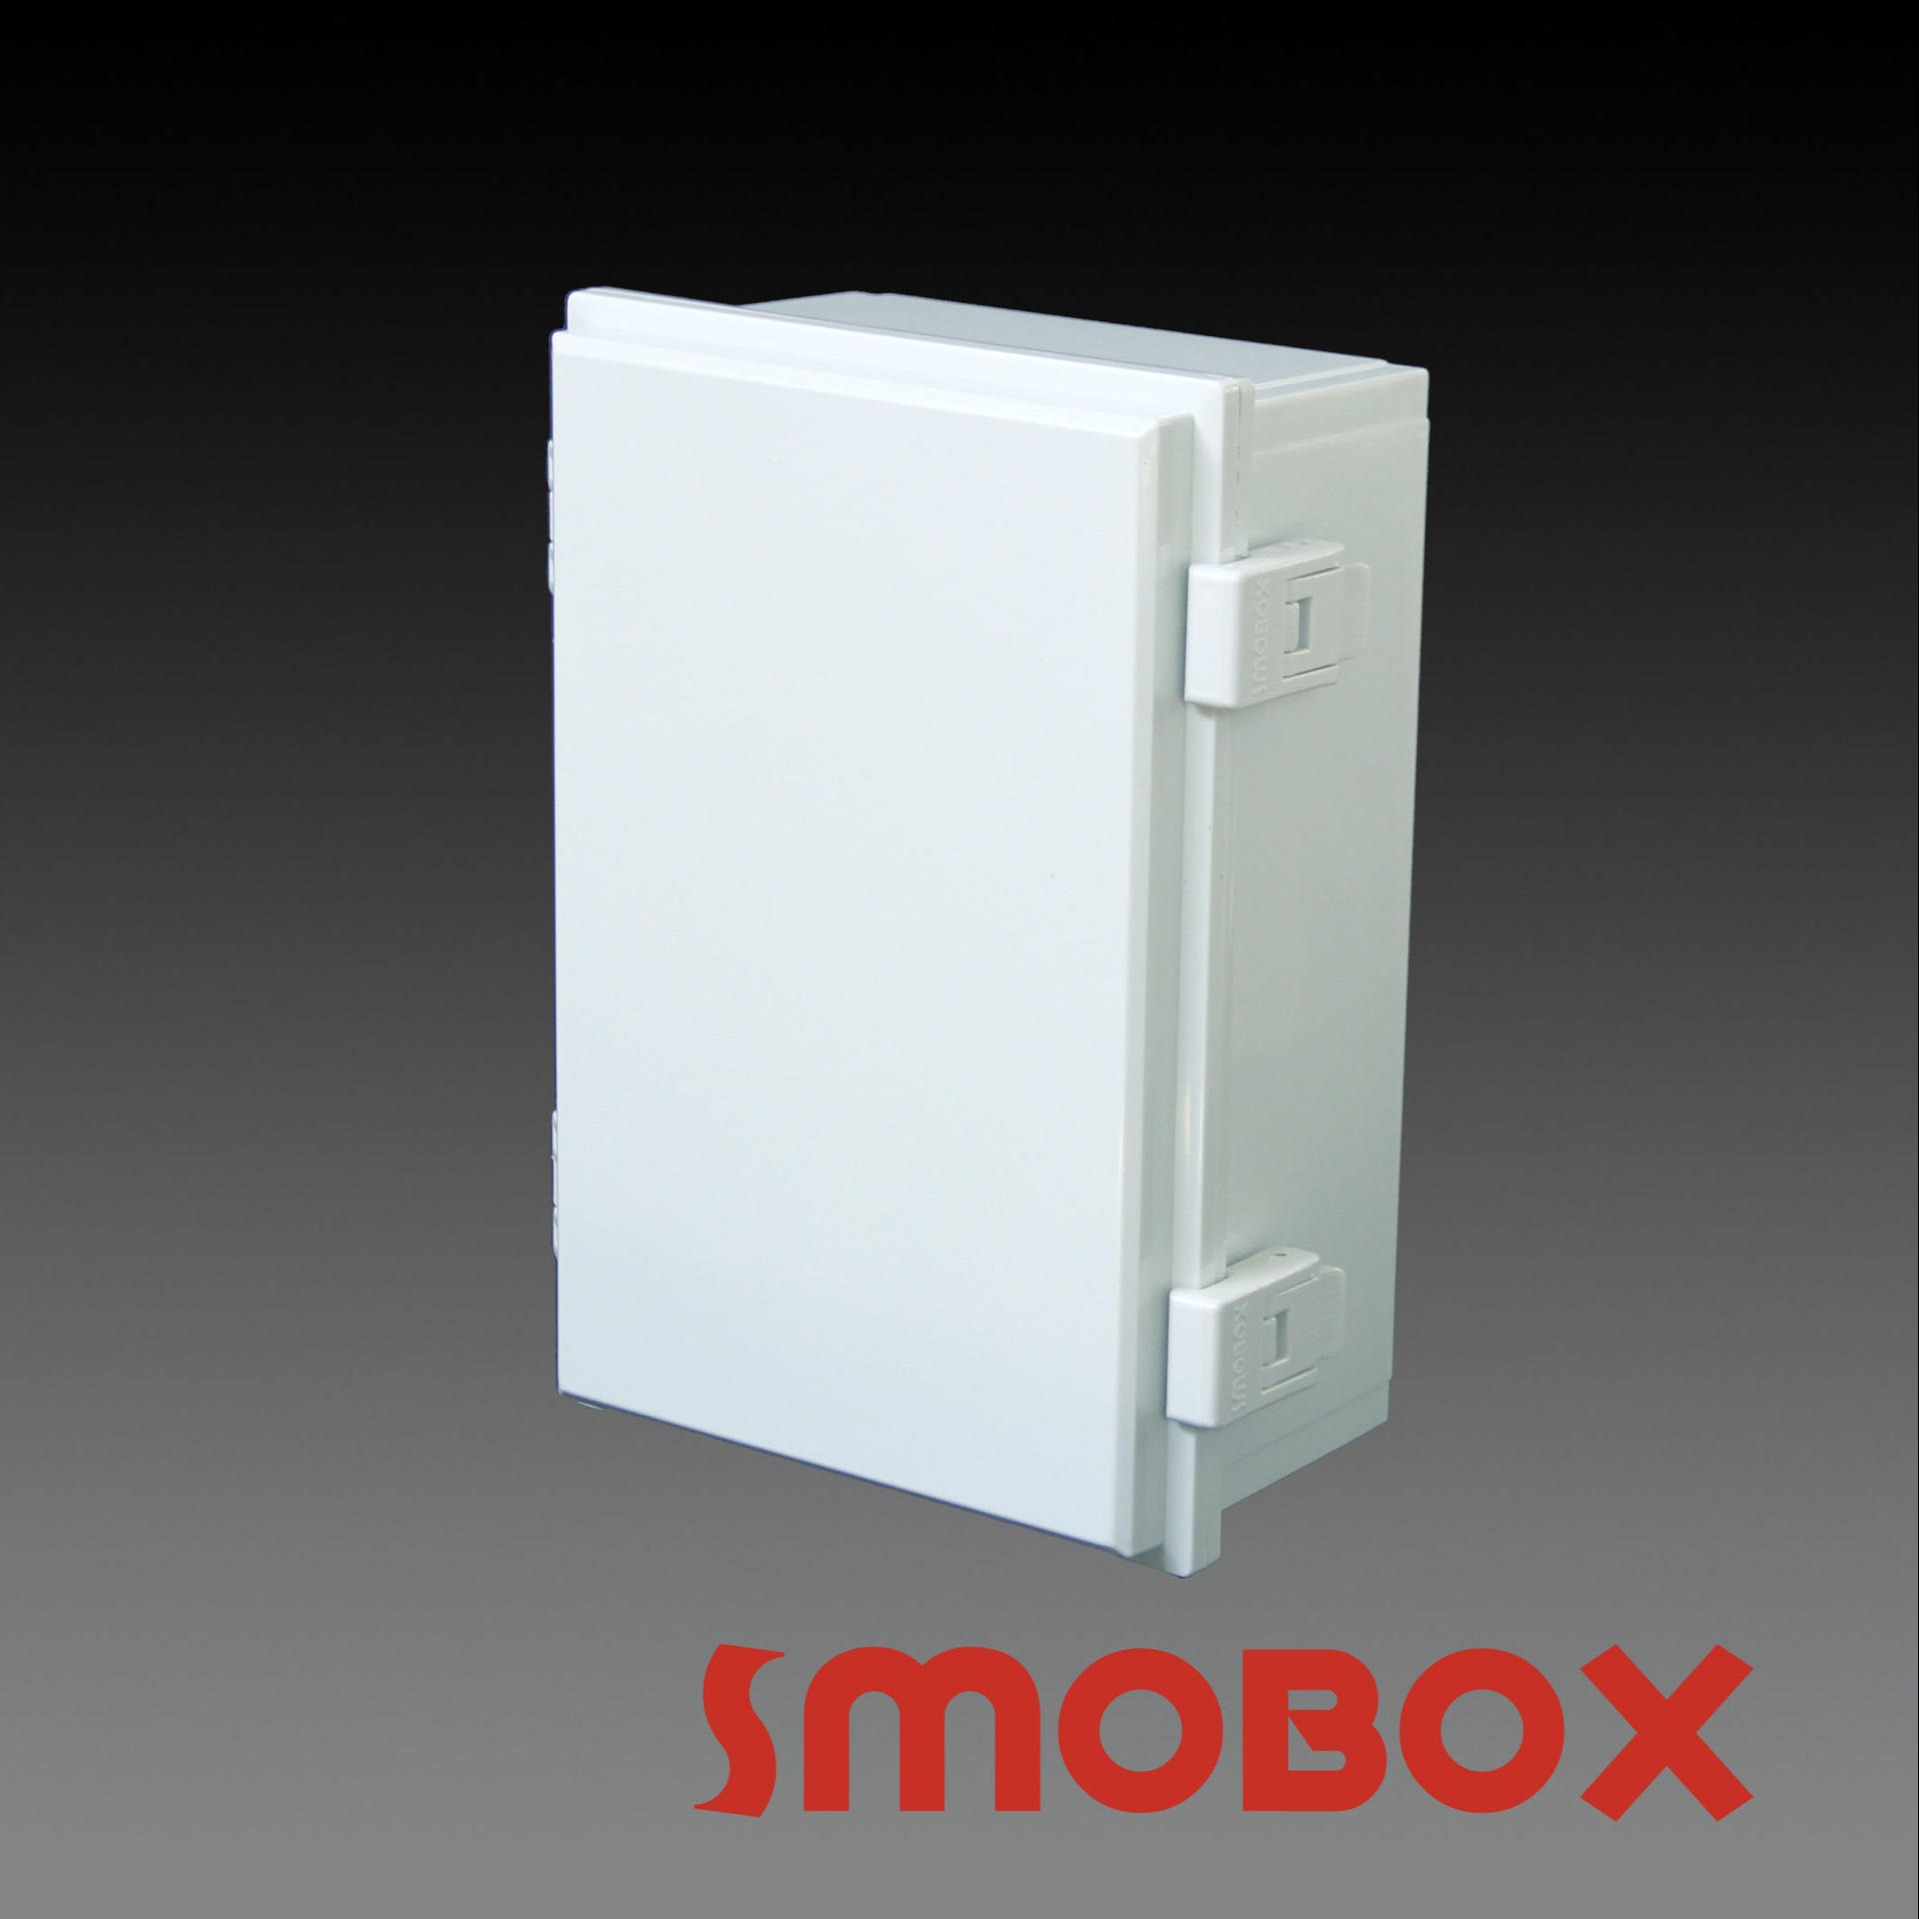 SMOBOX电气密封箱HE-172510   防水接线盒  塑料按钮盒  厂家直销  量大优惠